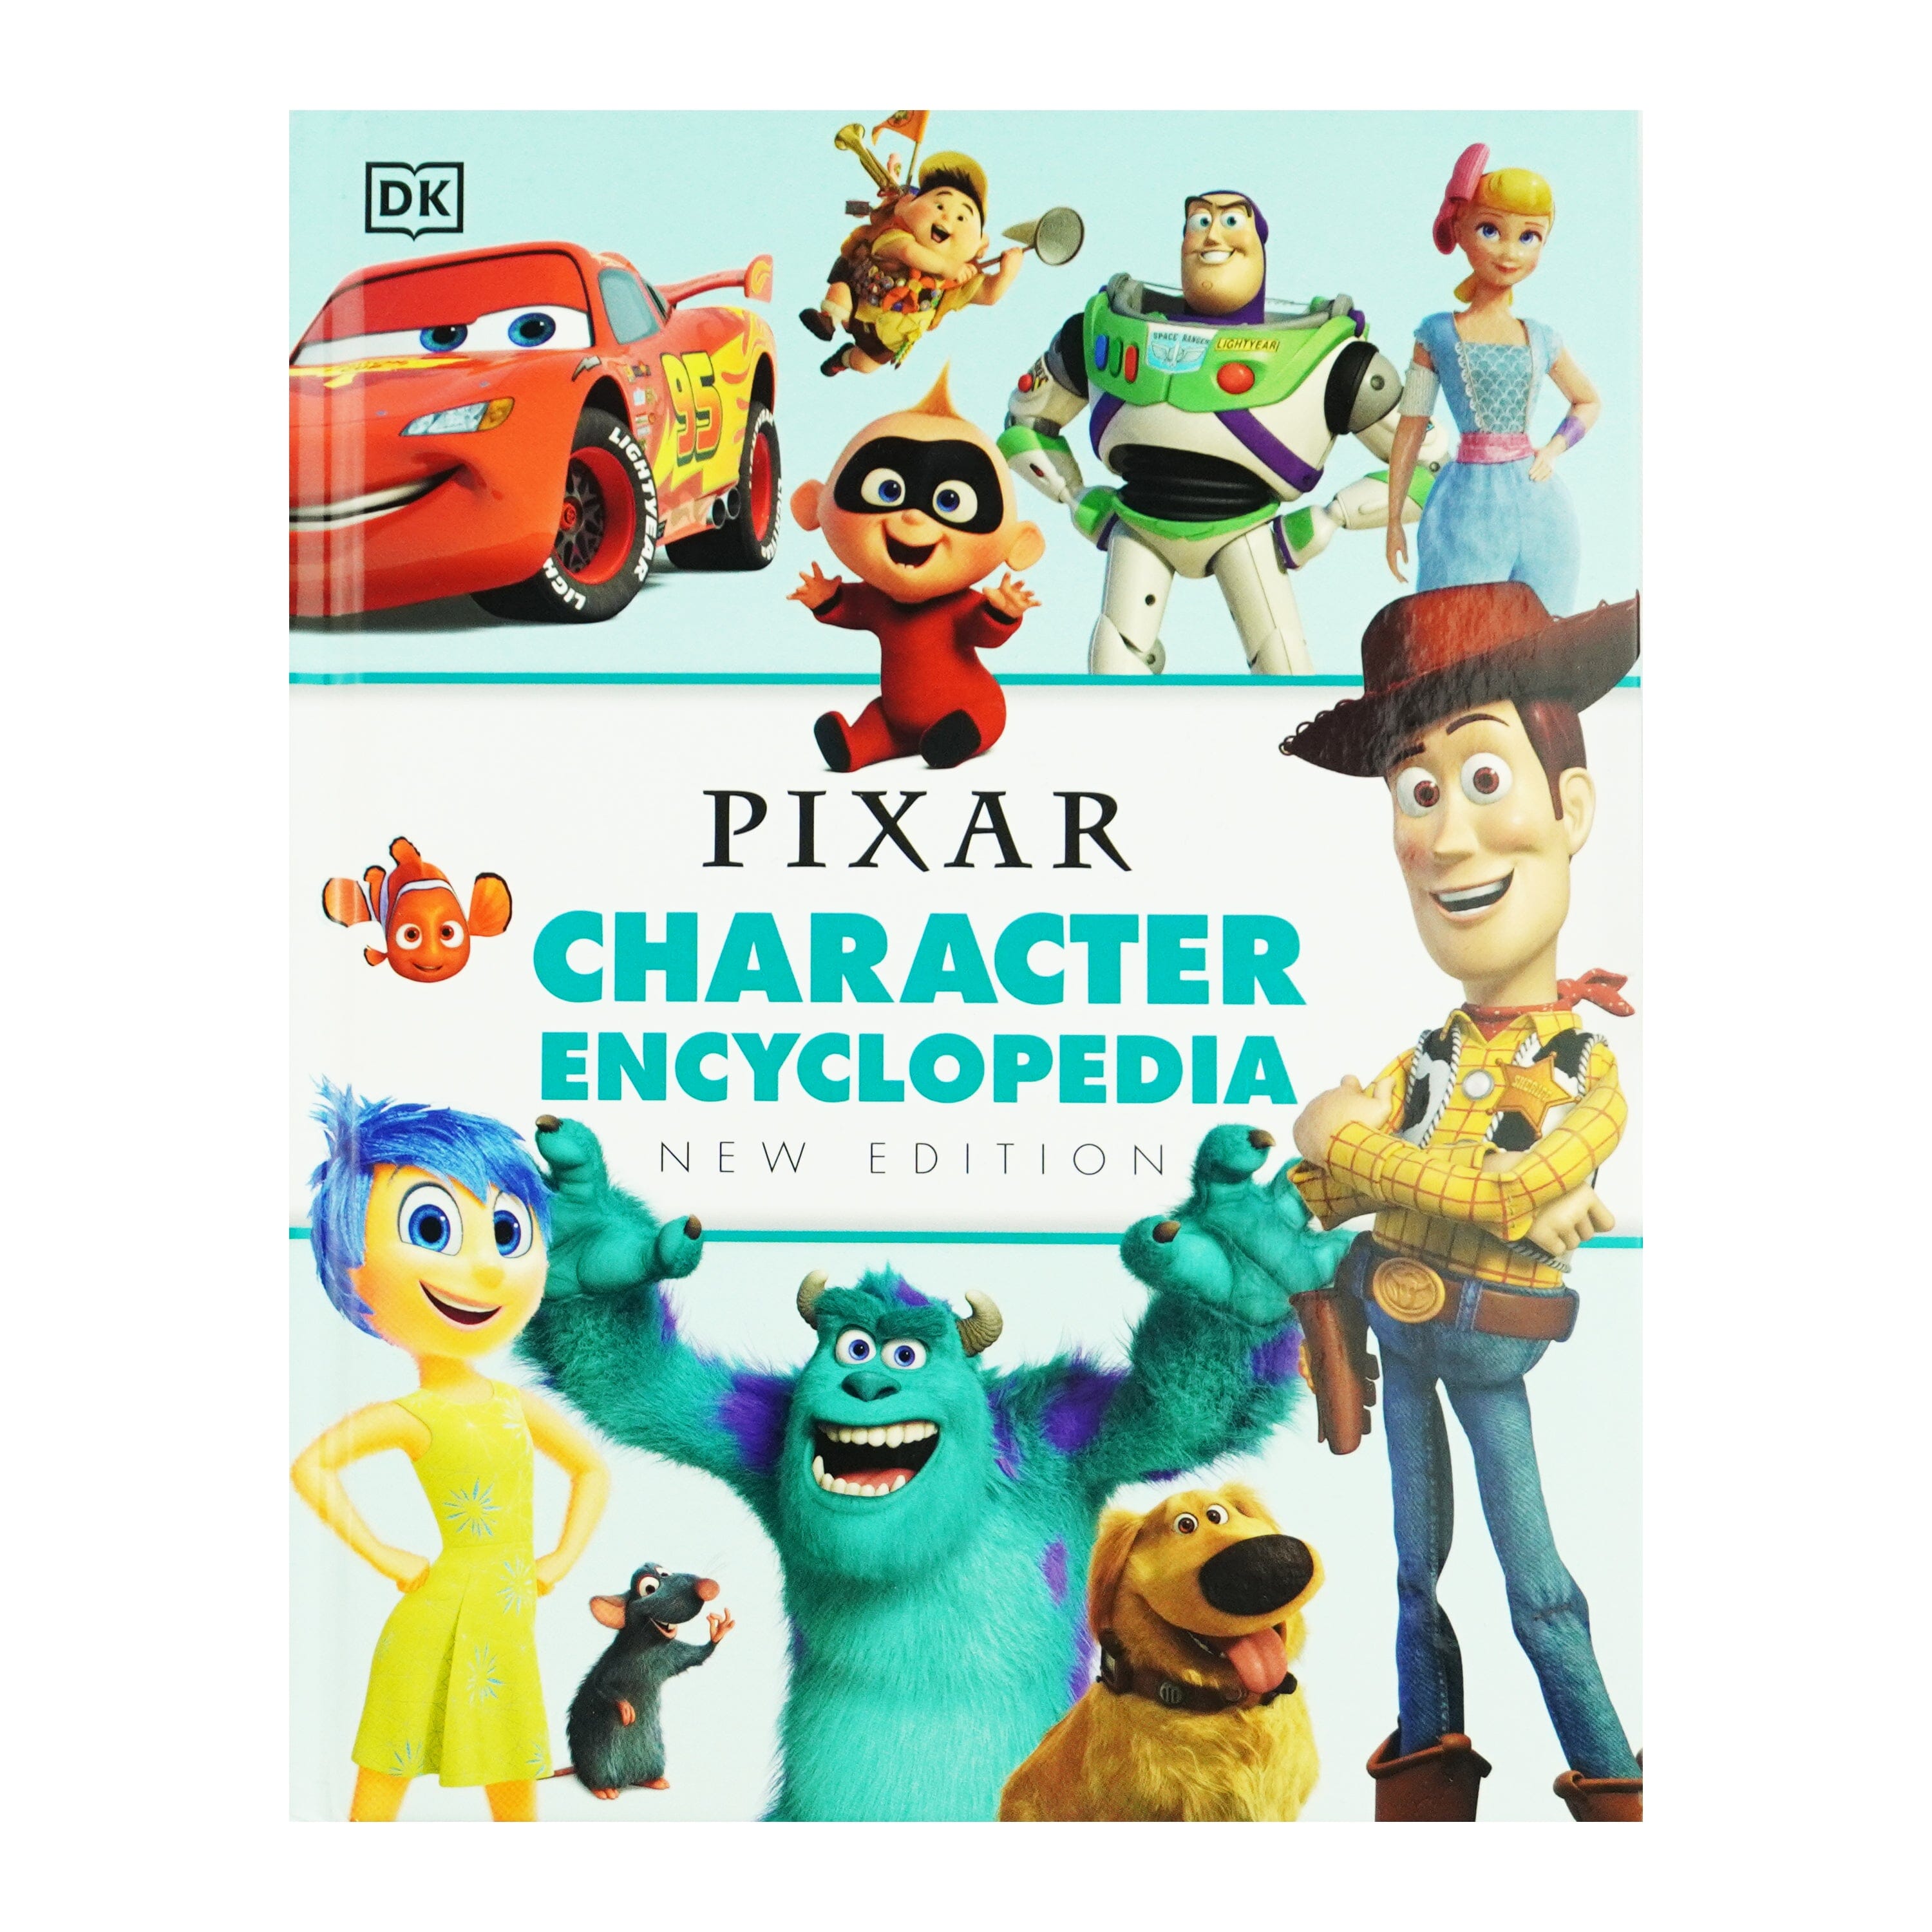 Pixar　—　Edition　Encyclopedia　DK　New　7-11　Ha　by　Ages　Character　Disney　Books2Door